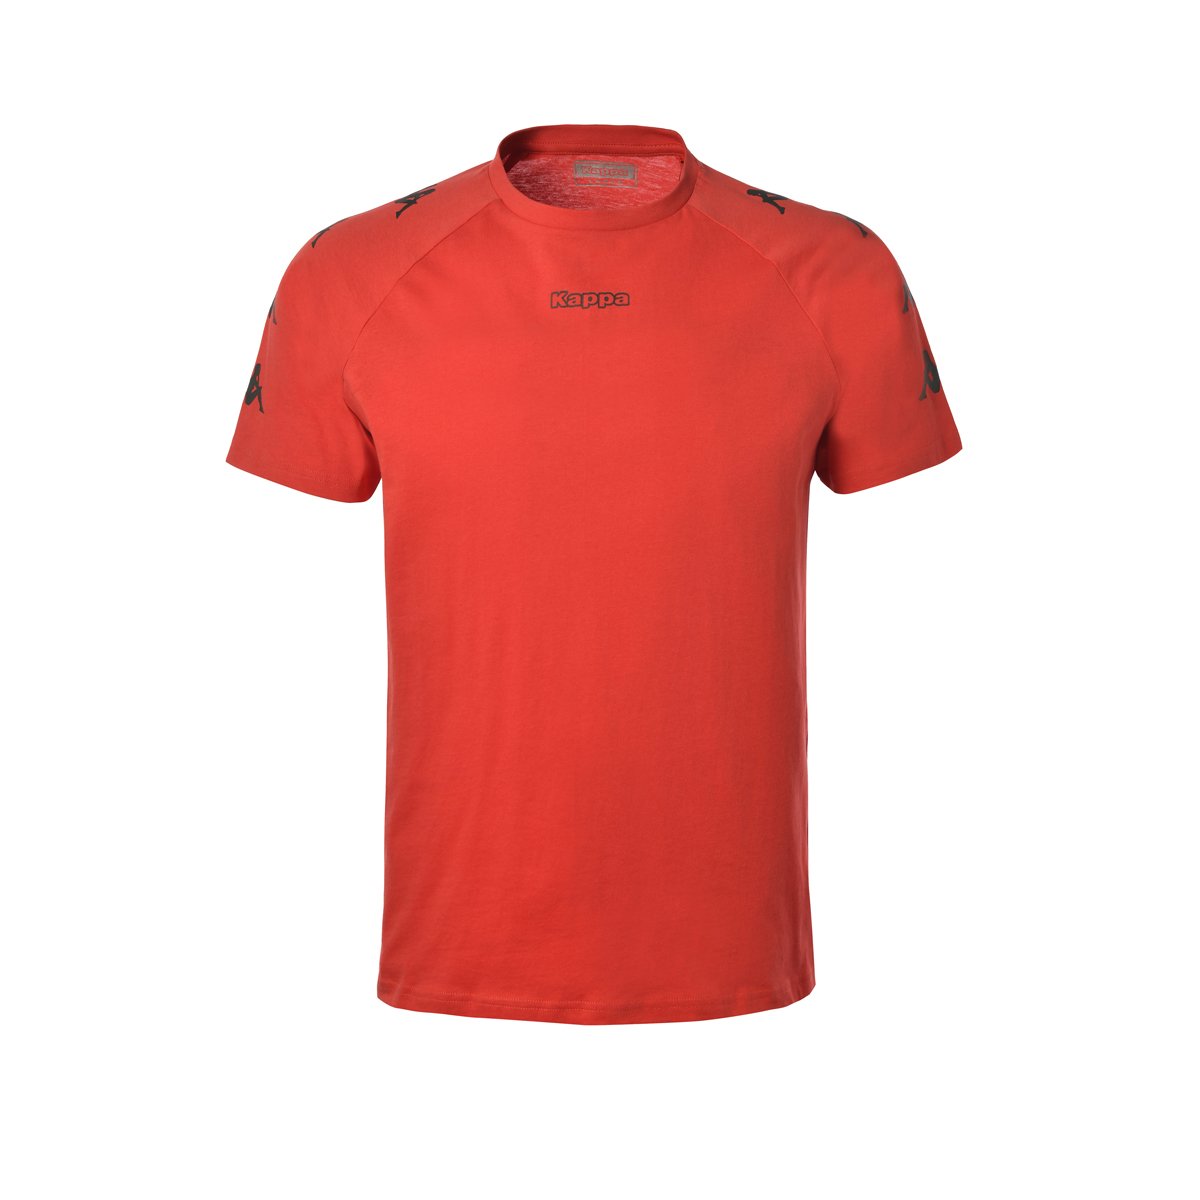 Camiseta Klake rojo hombre - Imagen 4